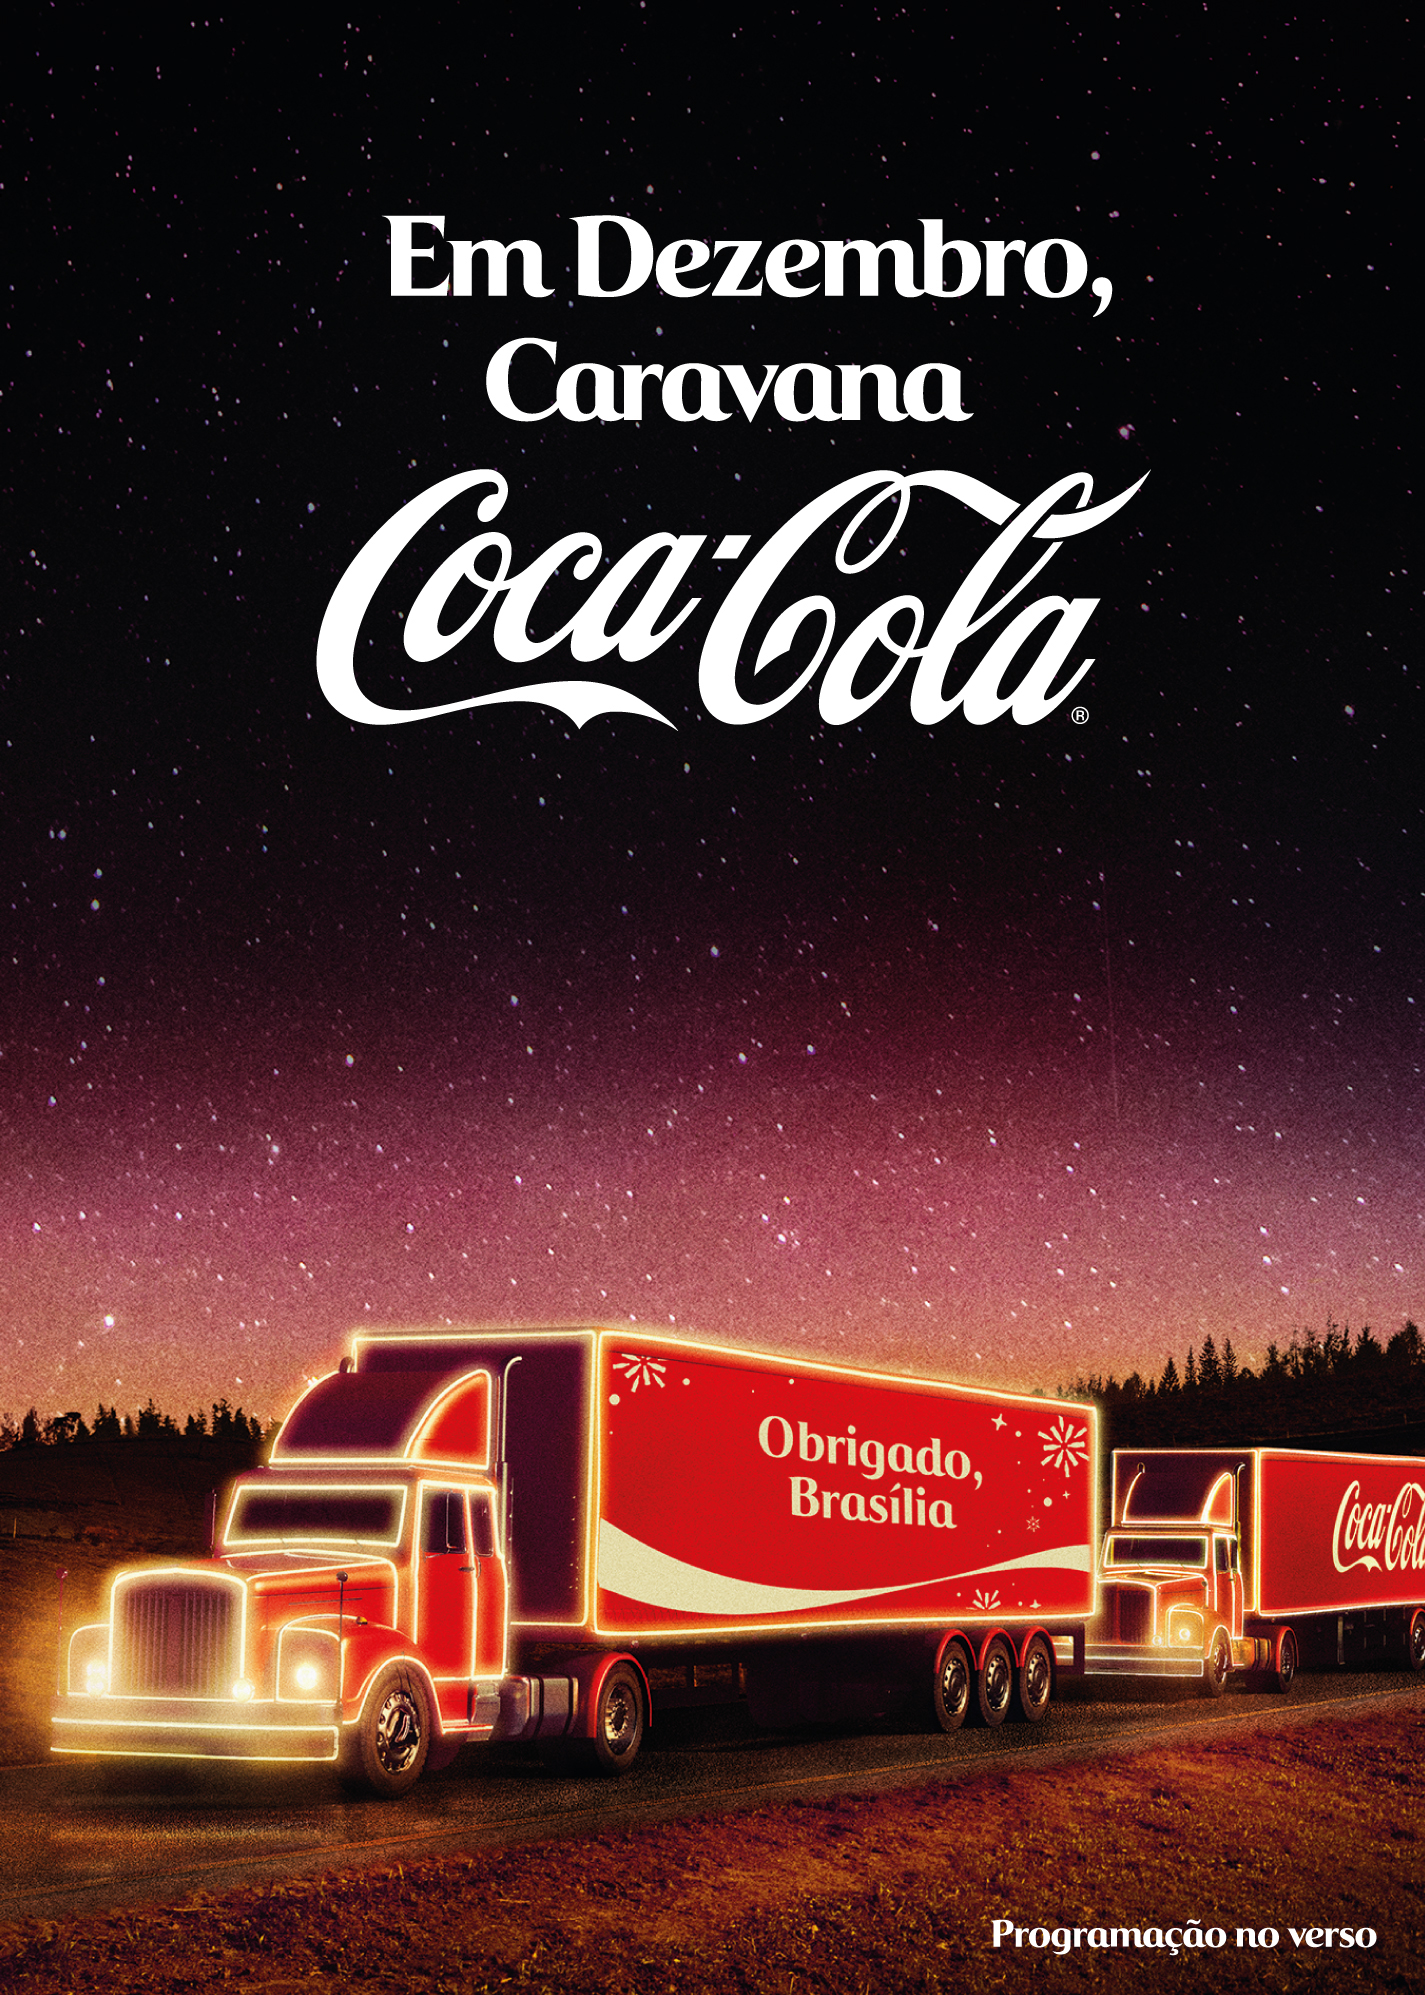 Caravana de Natal Coca-Cola (2016) on Behance